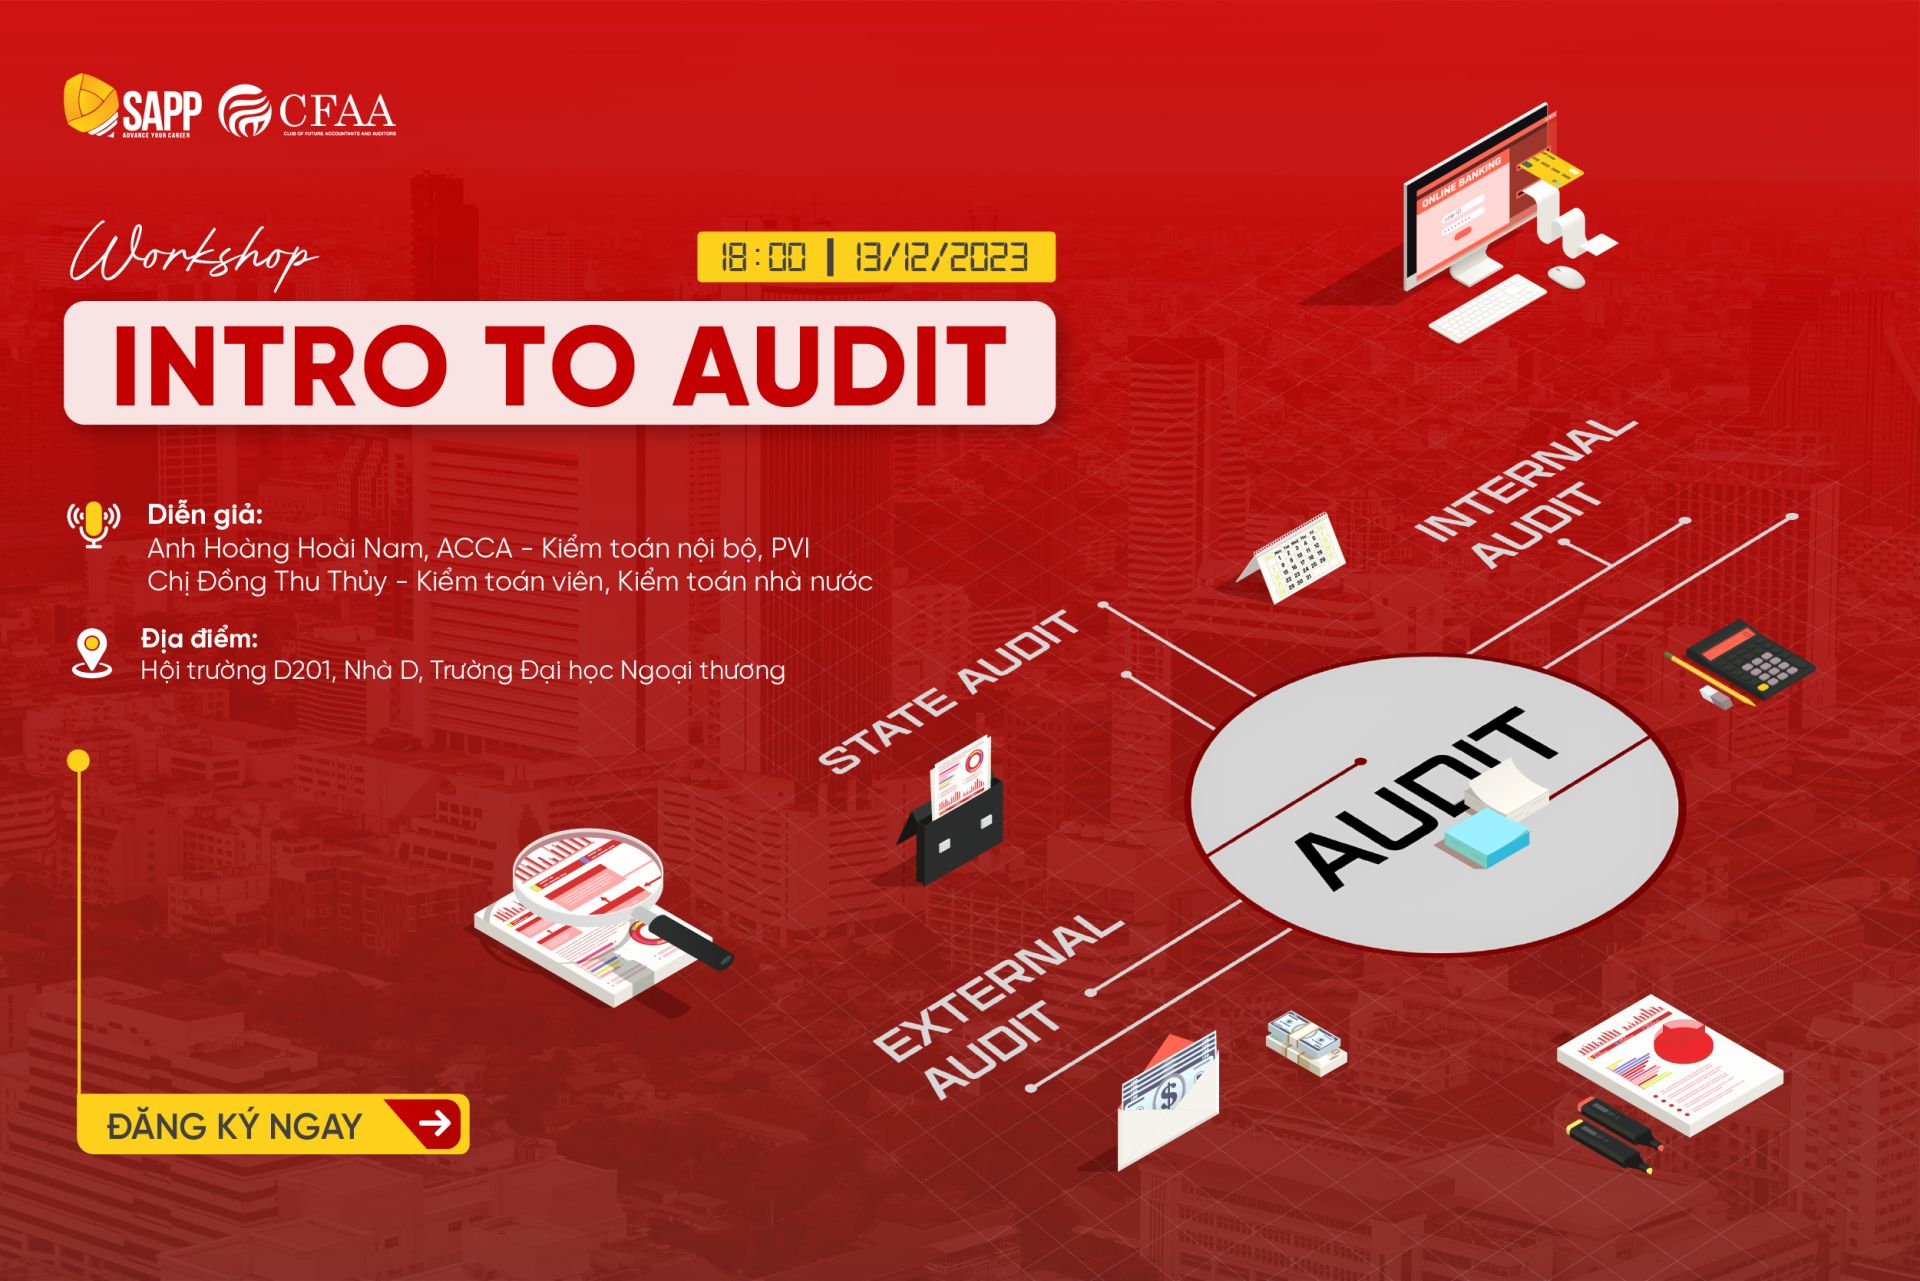 Workshop "Intro To Audit"